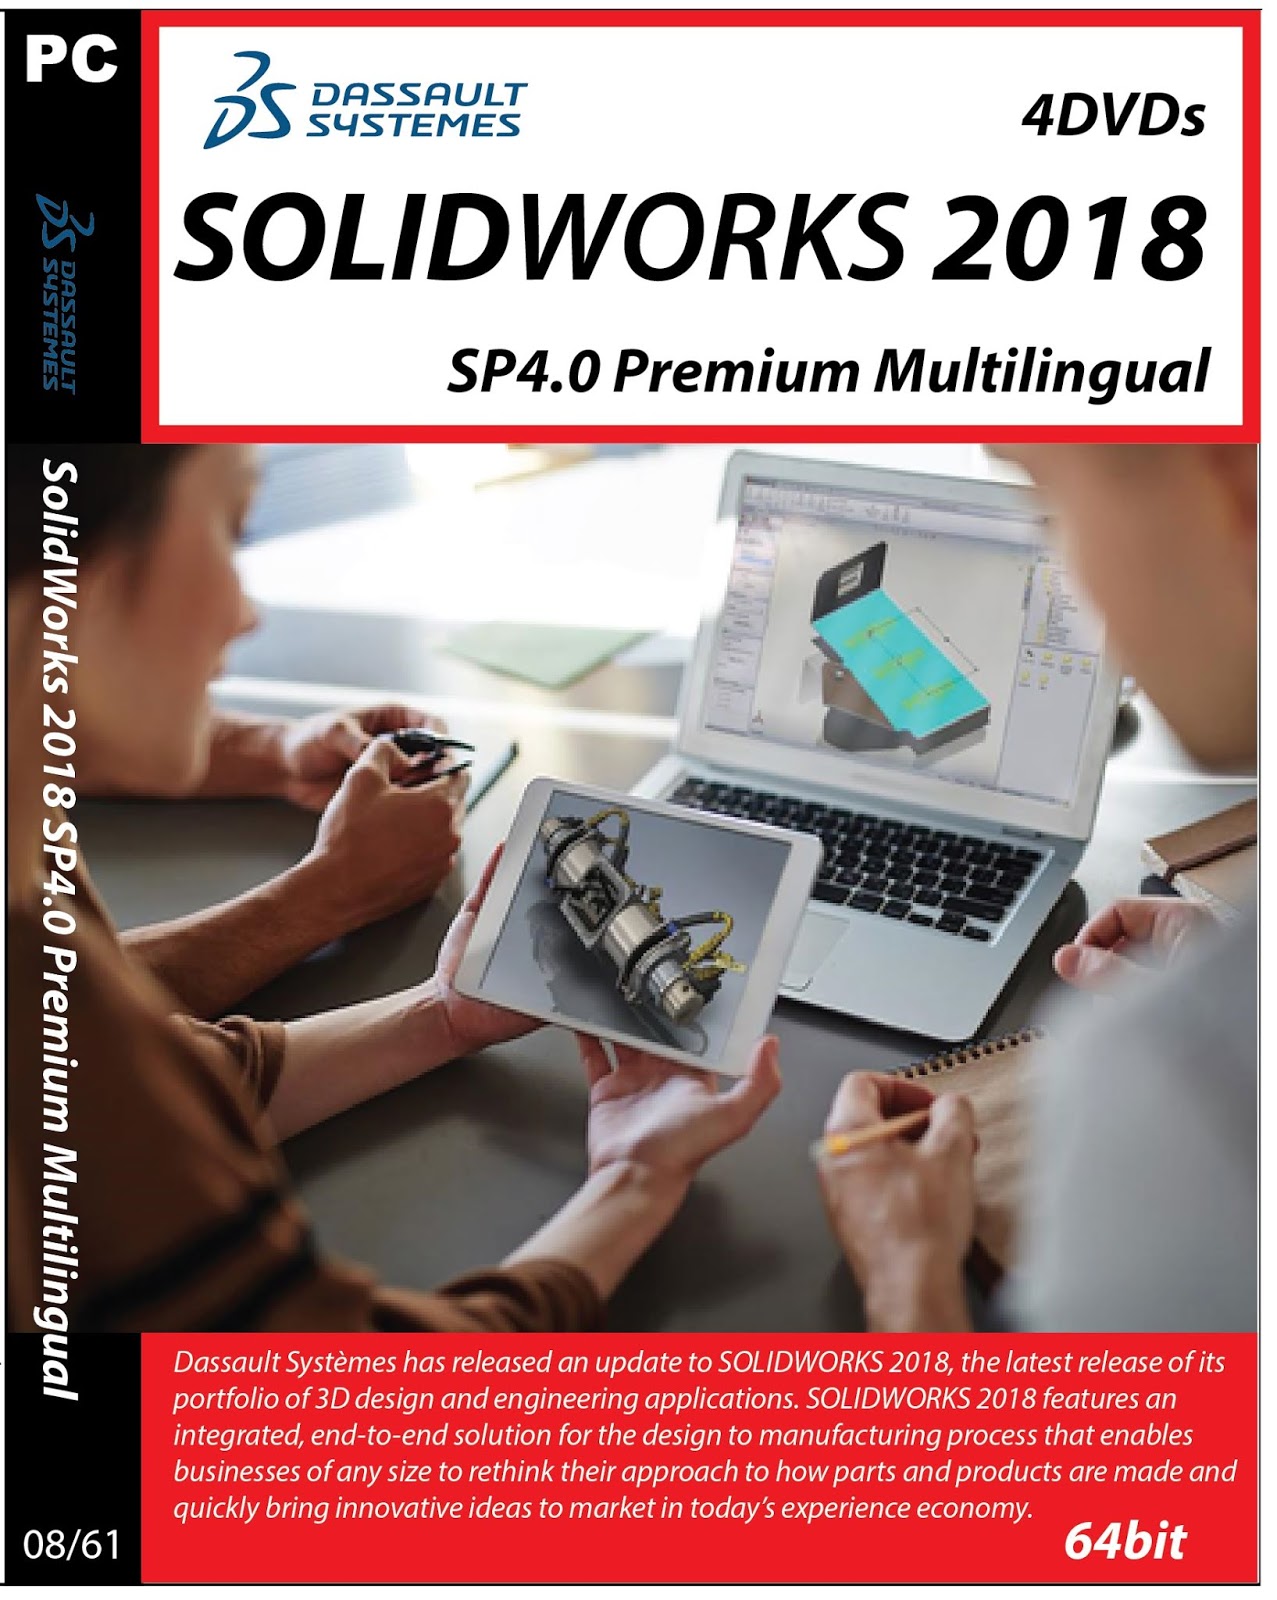 solidworks 2018 cracked version download us